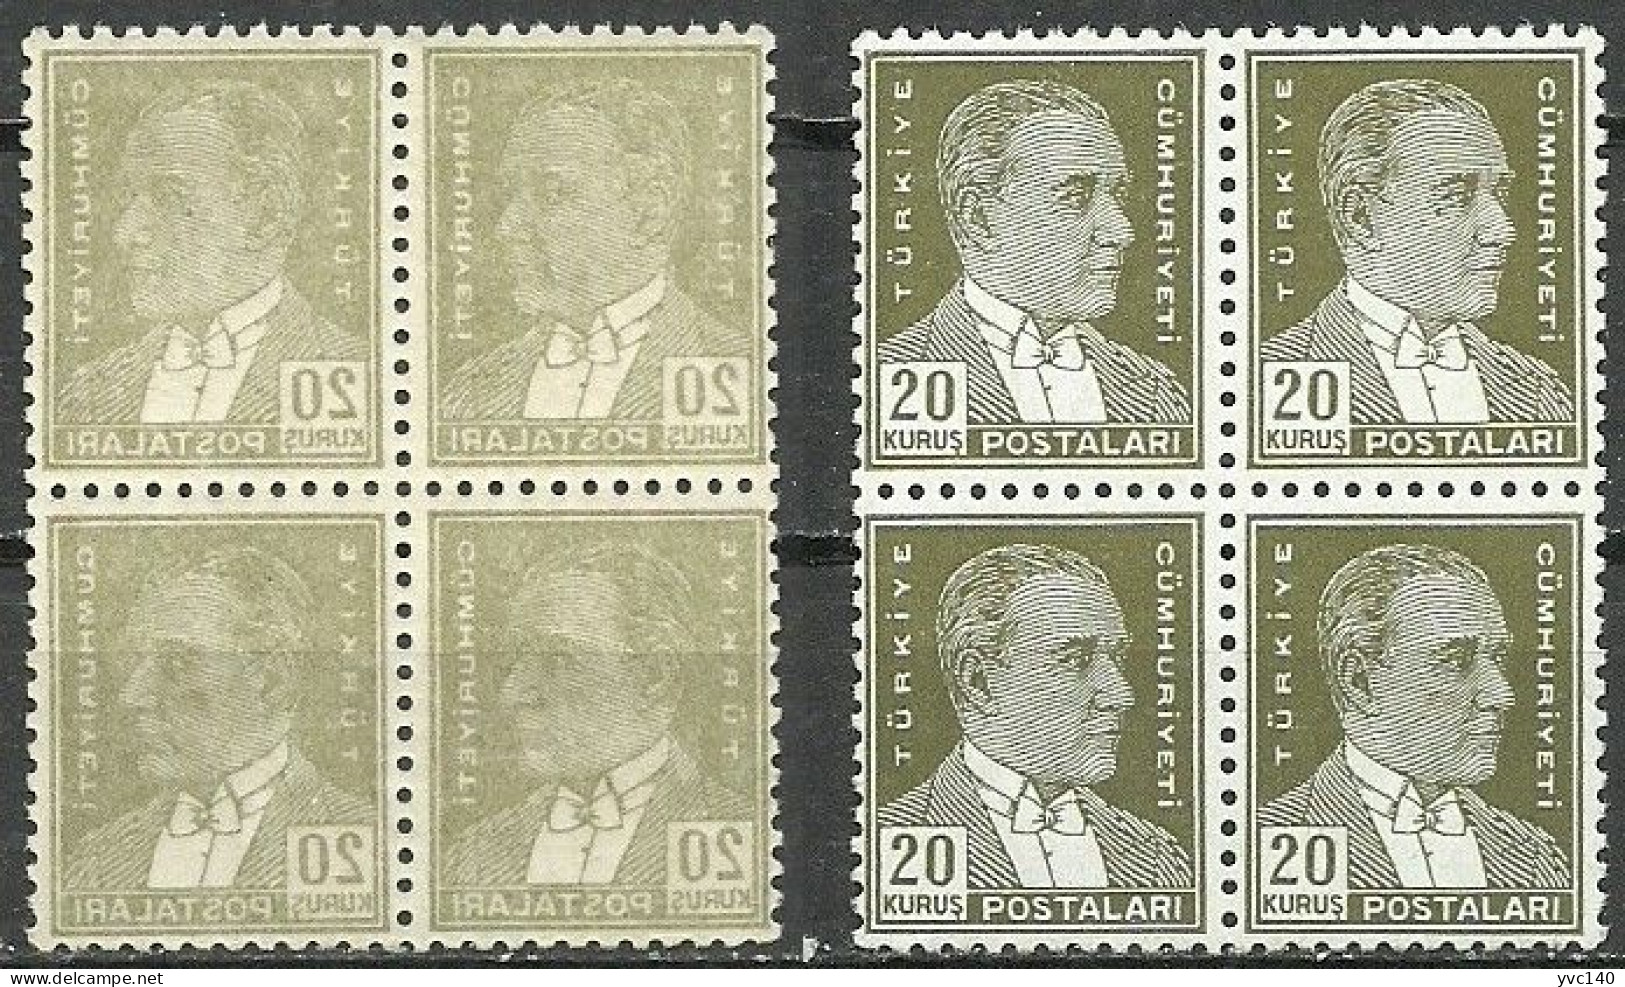 Turkey; 1933 2nd Ataturk Issue Stamp 20 K. "Abklatsch" ERROR (Block Of 4) - Ongebruikt